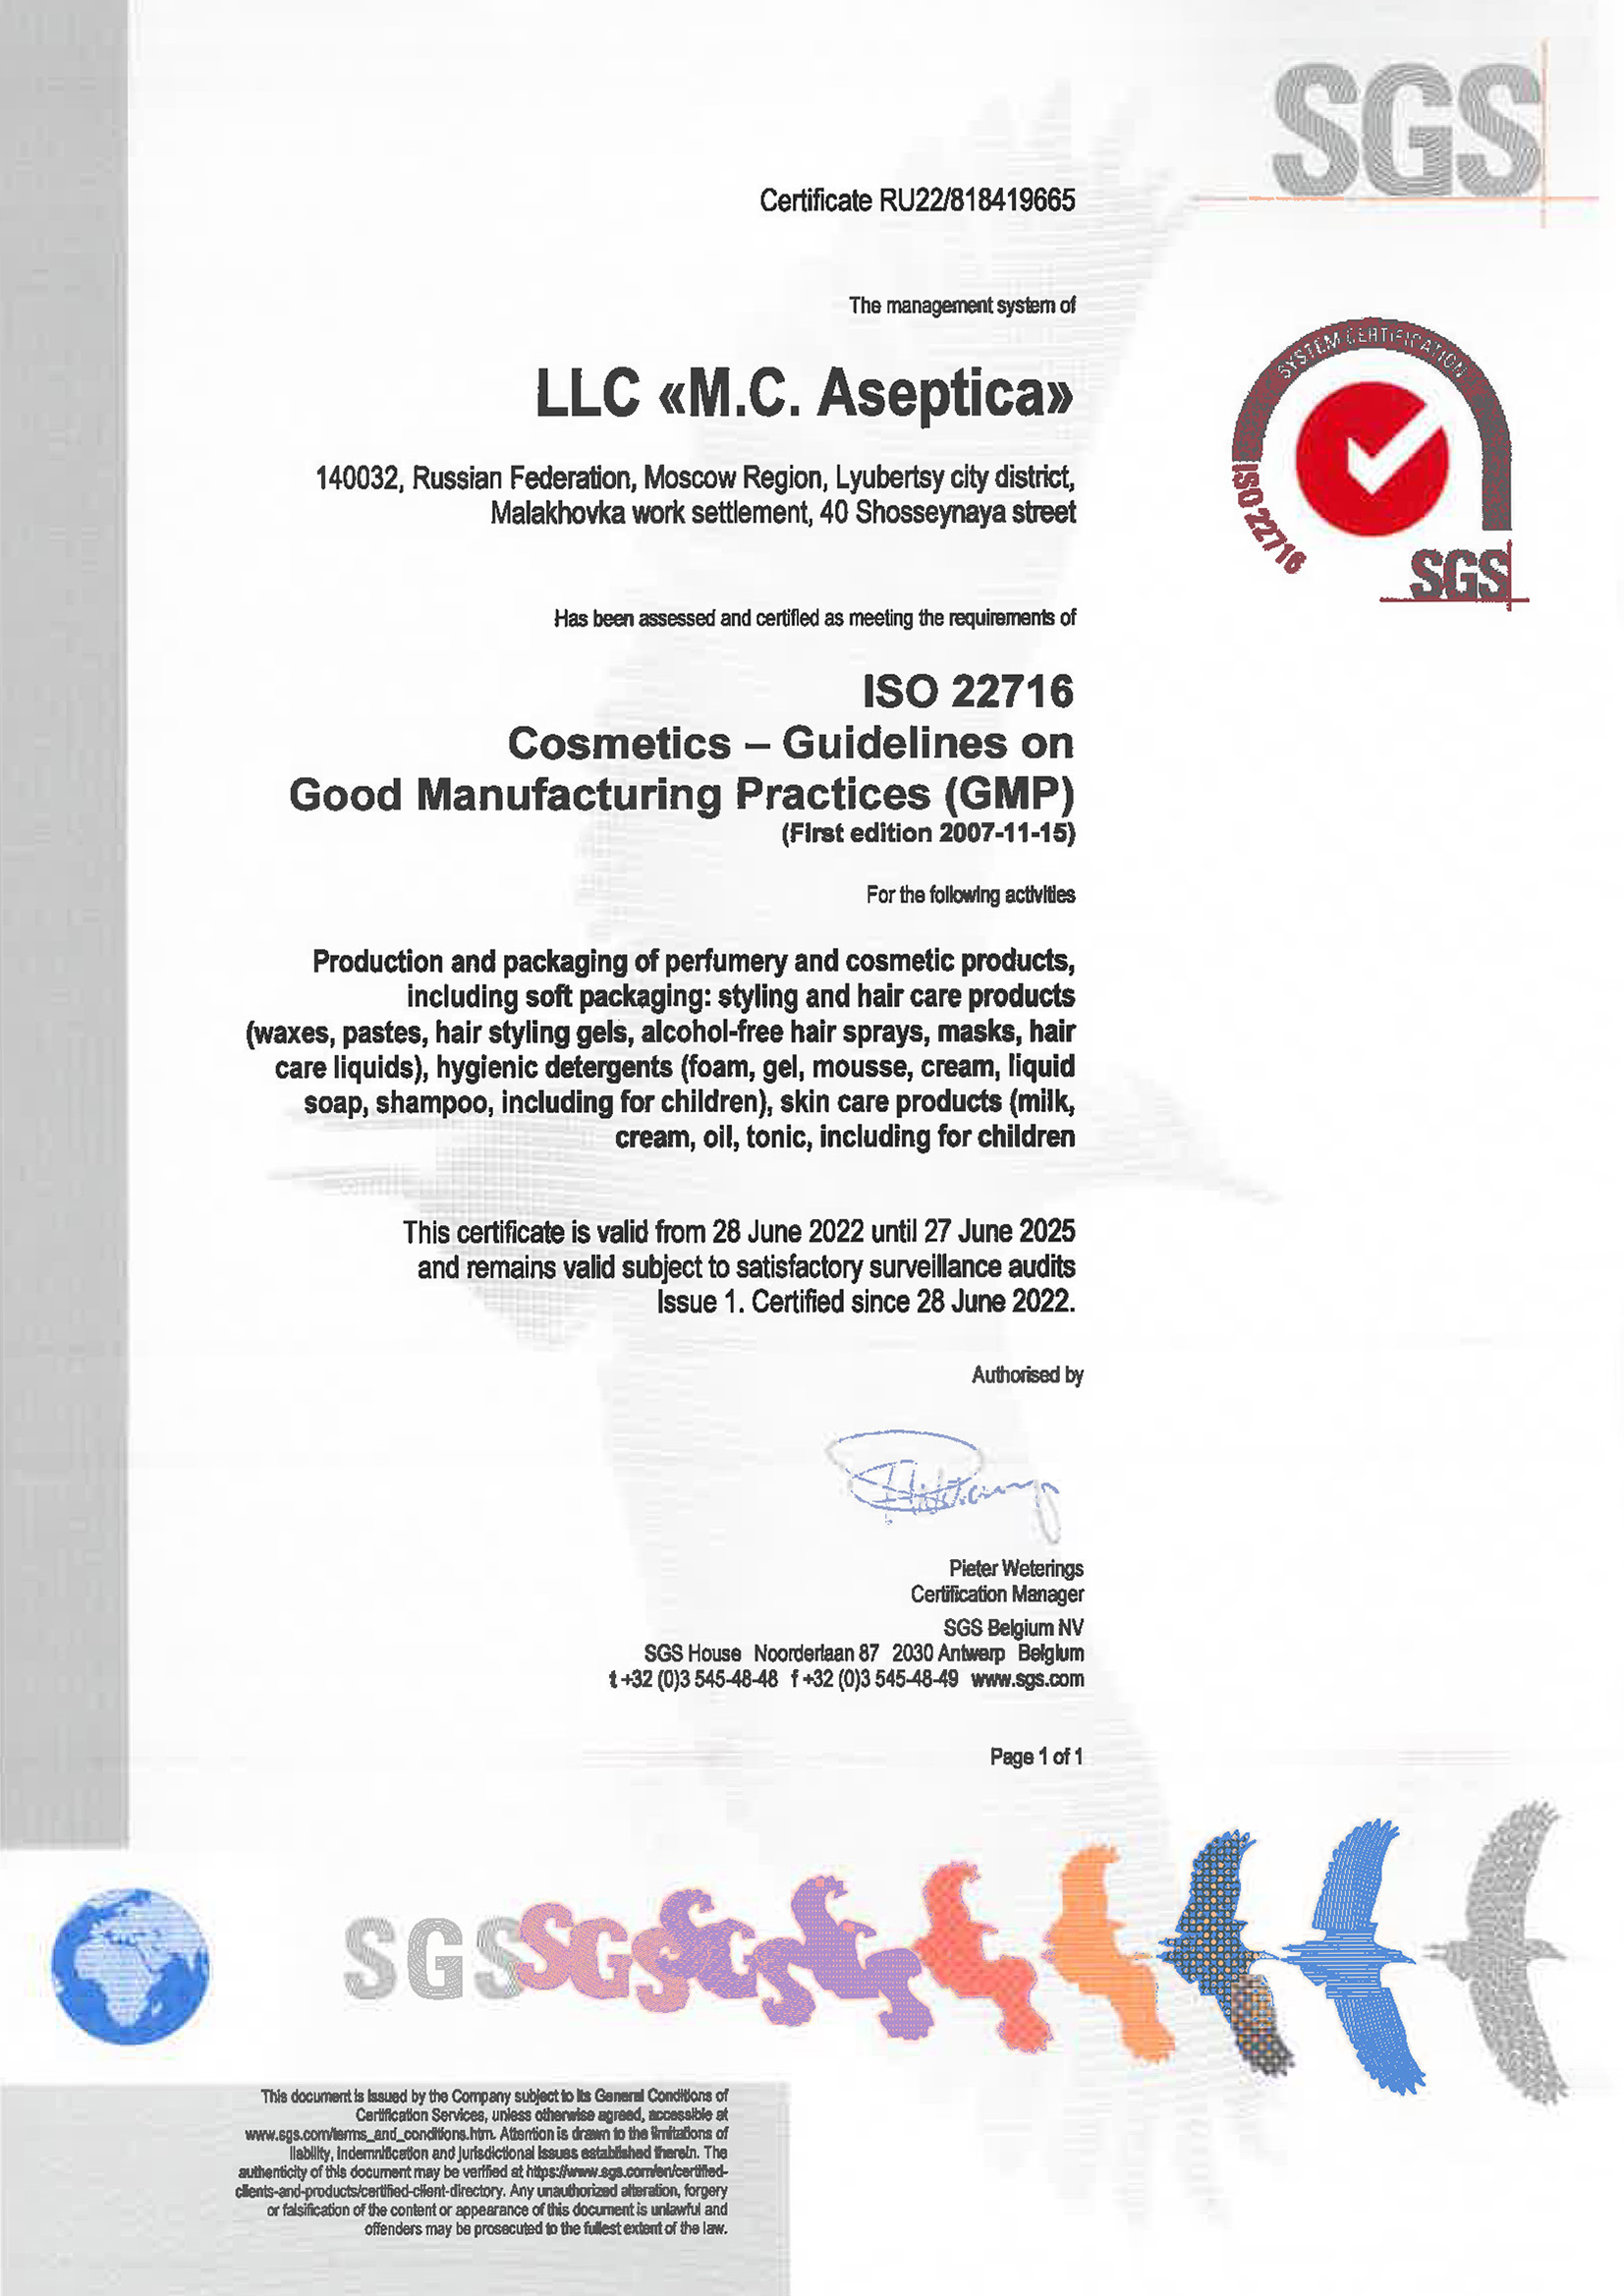 Сертификат качества GMP ISO 22716 (англ.)